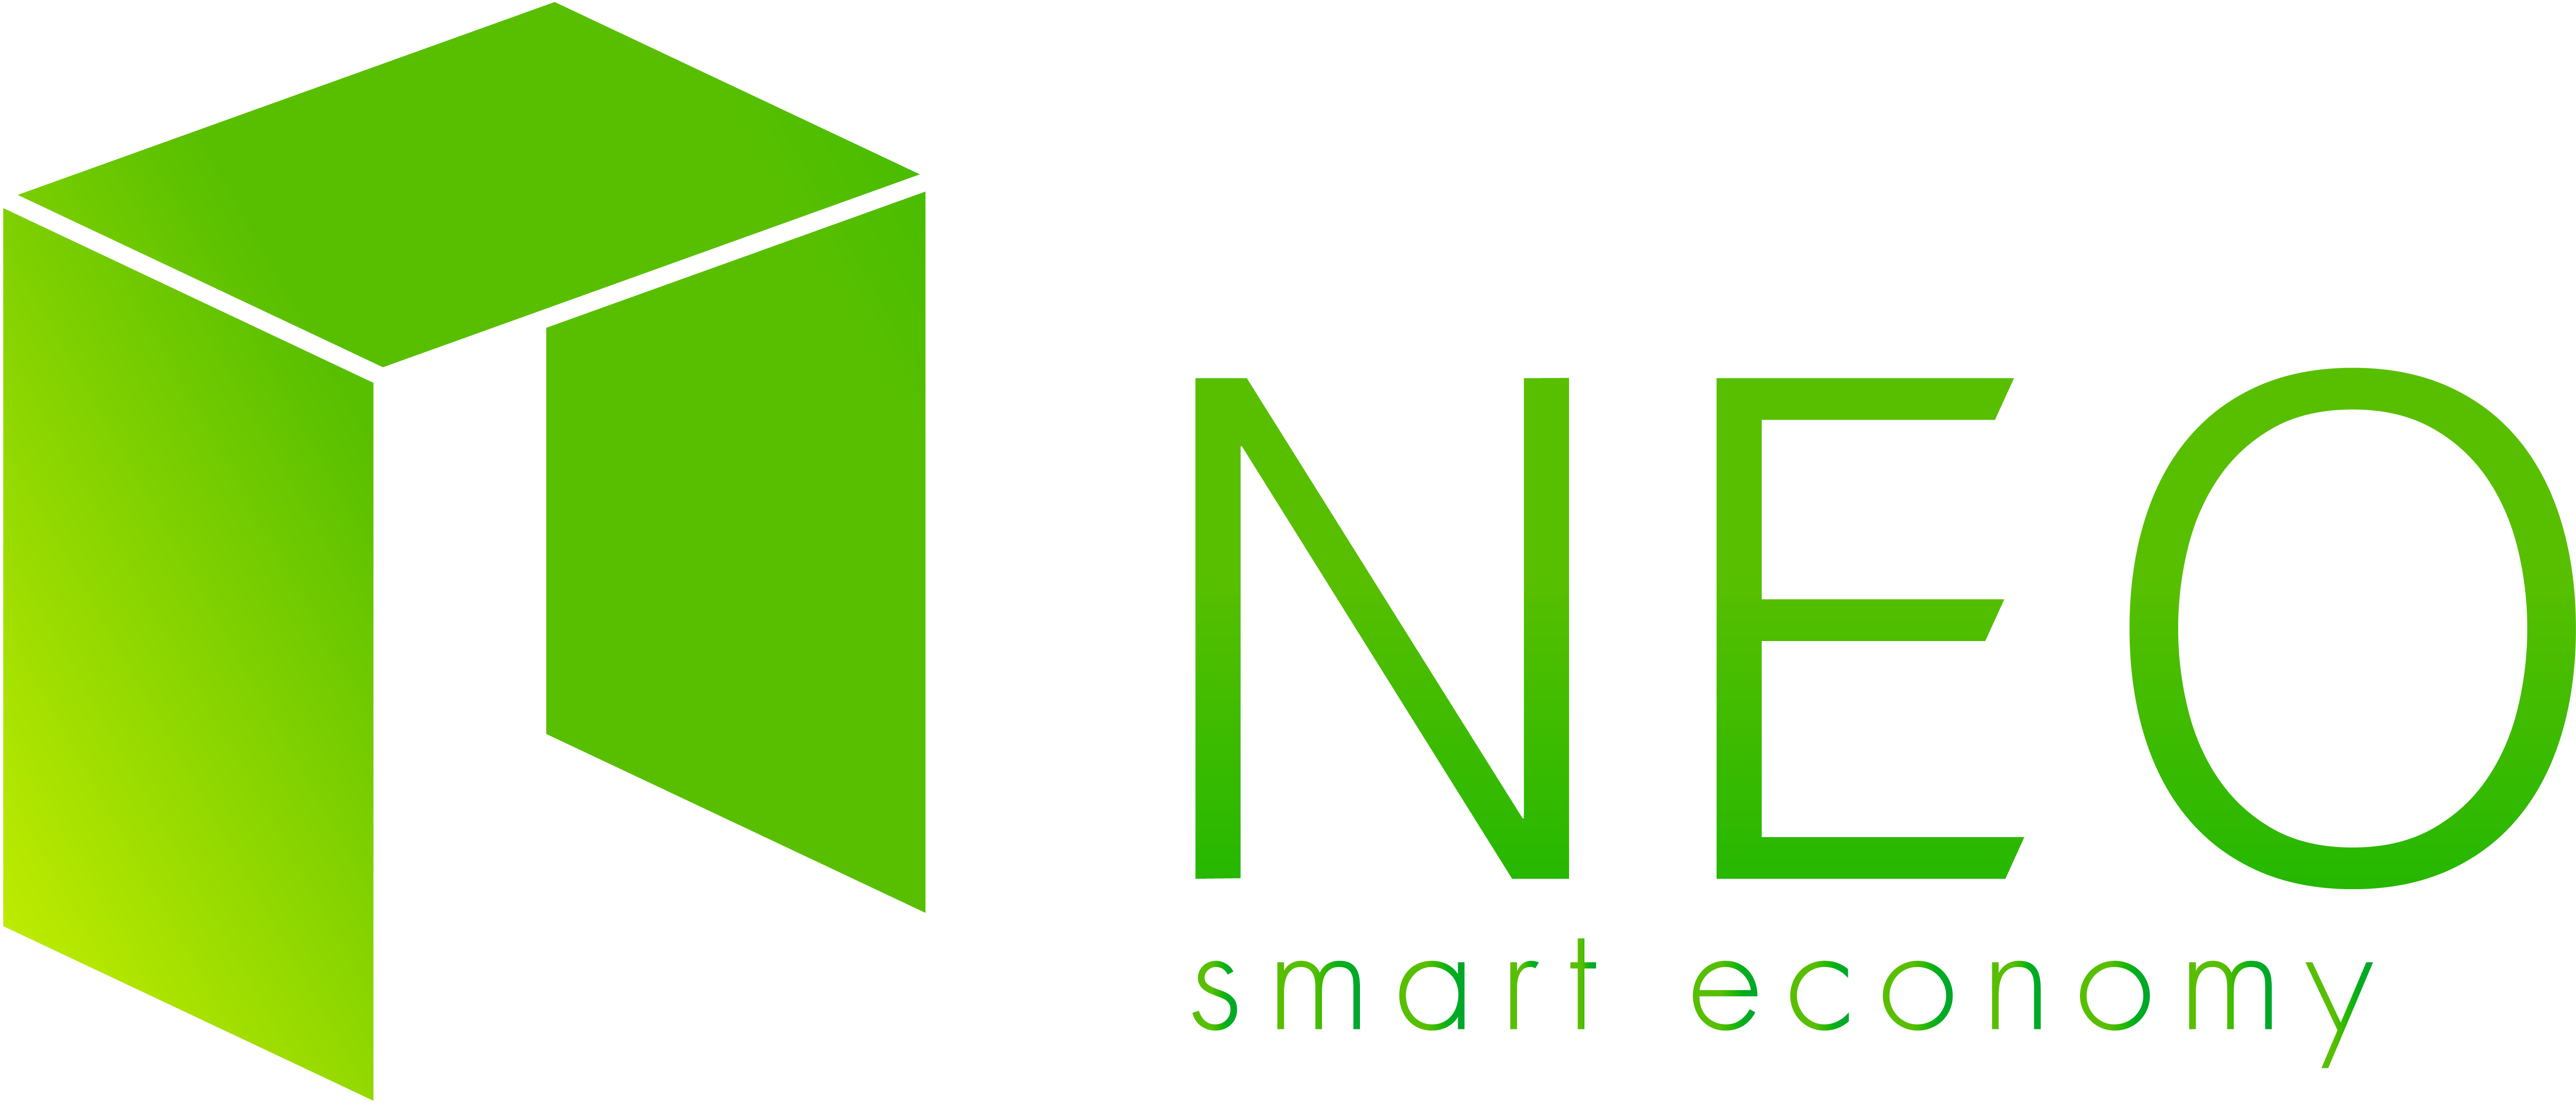 Neo Logo - NEO-smart-economy-logo - Runway East